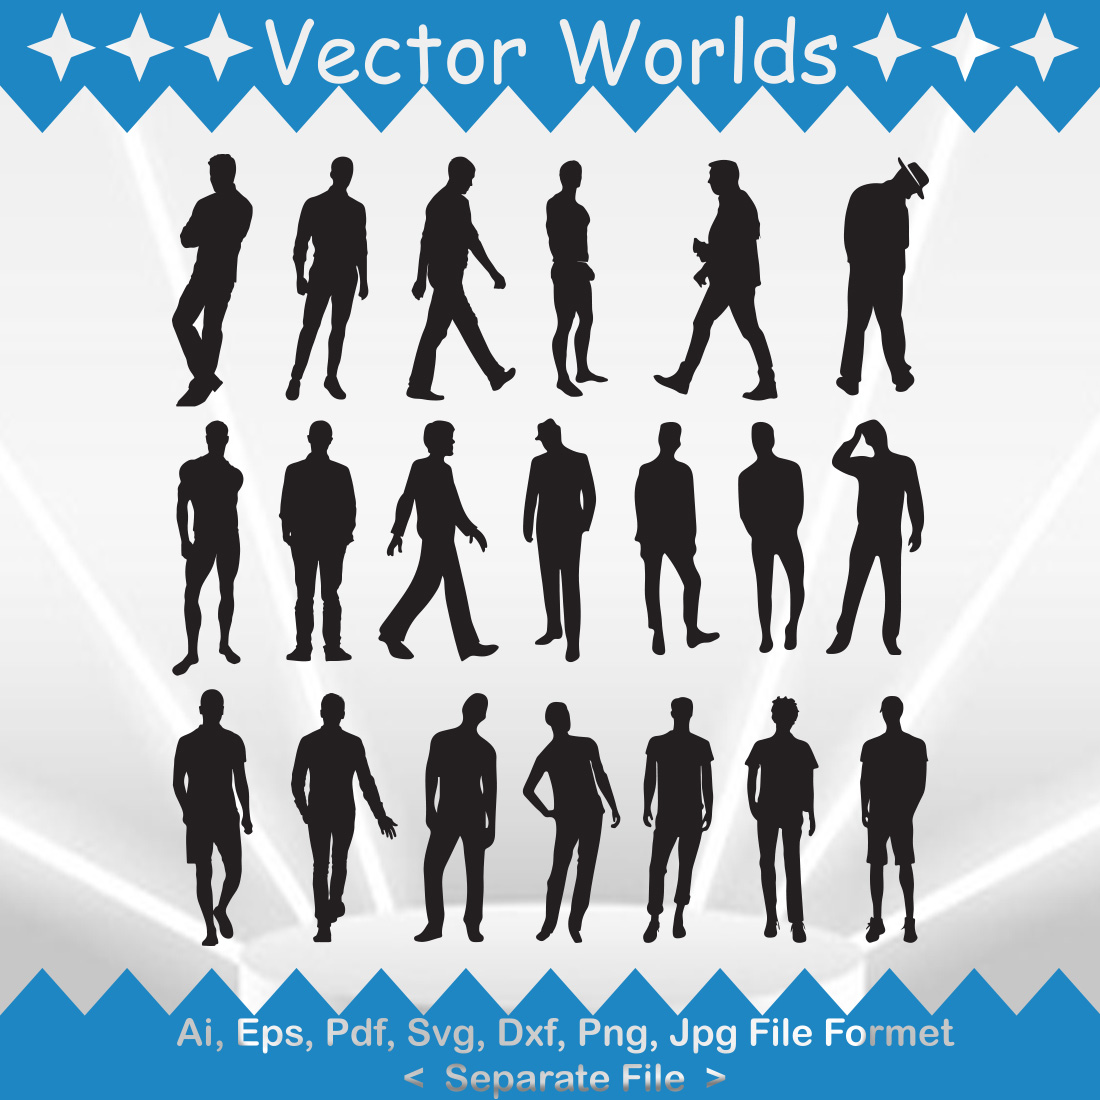 Model Boys SVG Vector Design cover image.